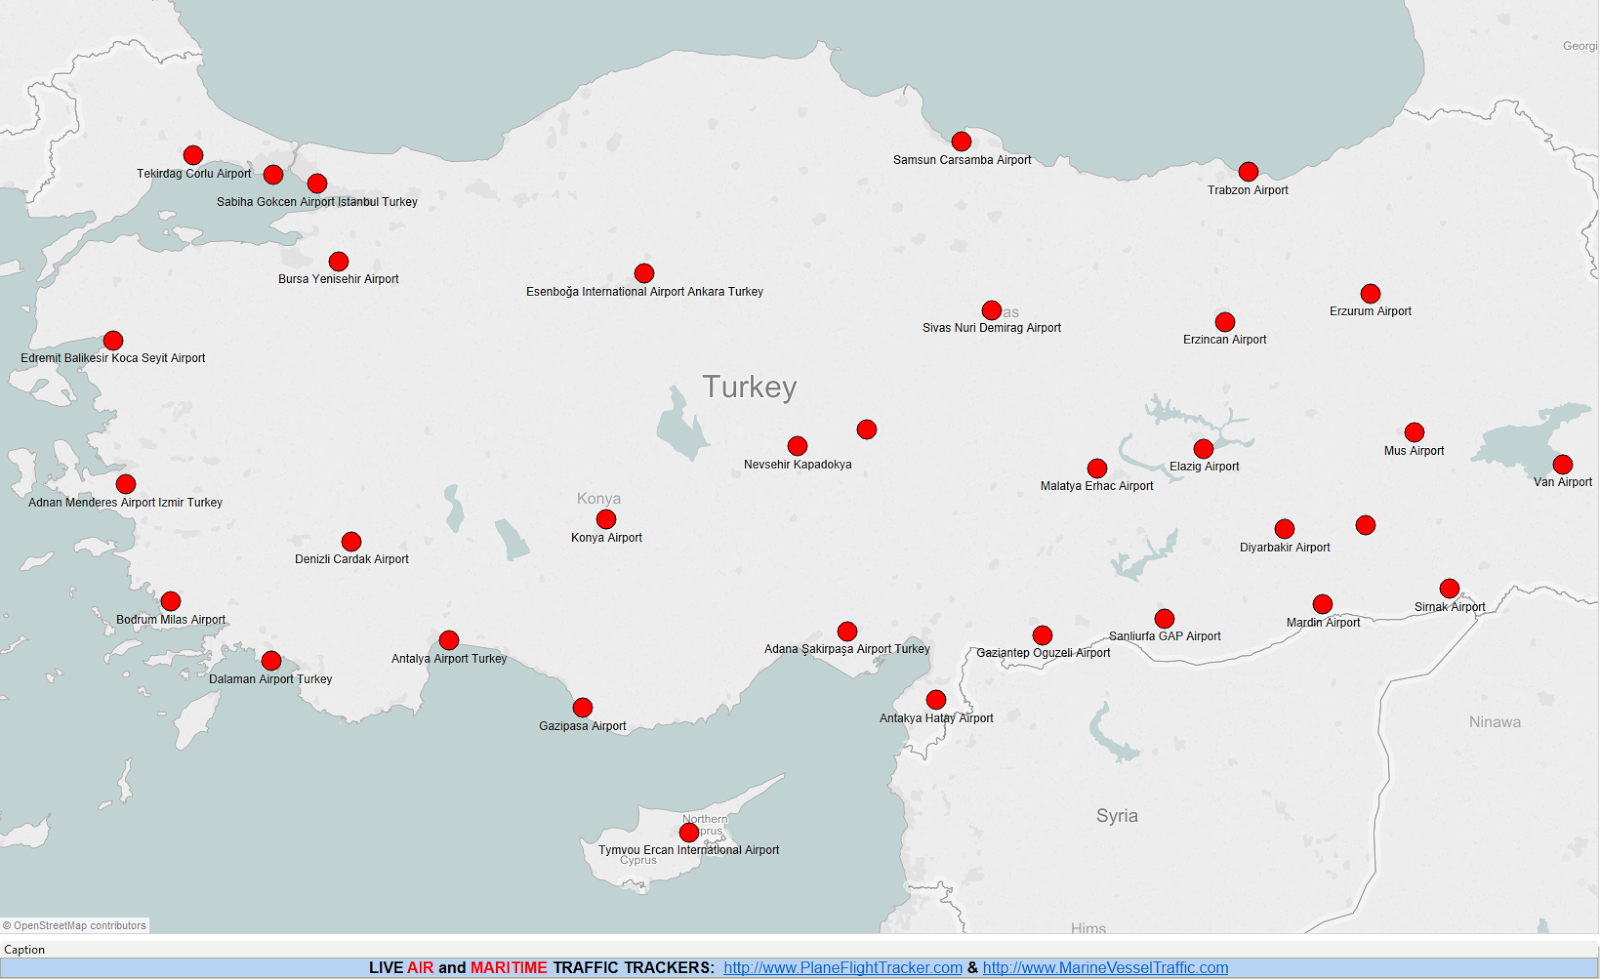 TURKEY AIRPORTS MAP